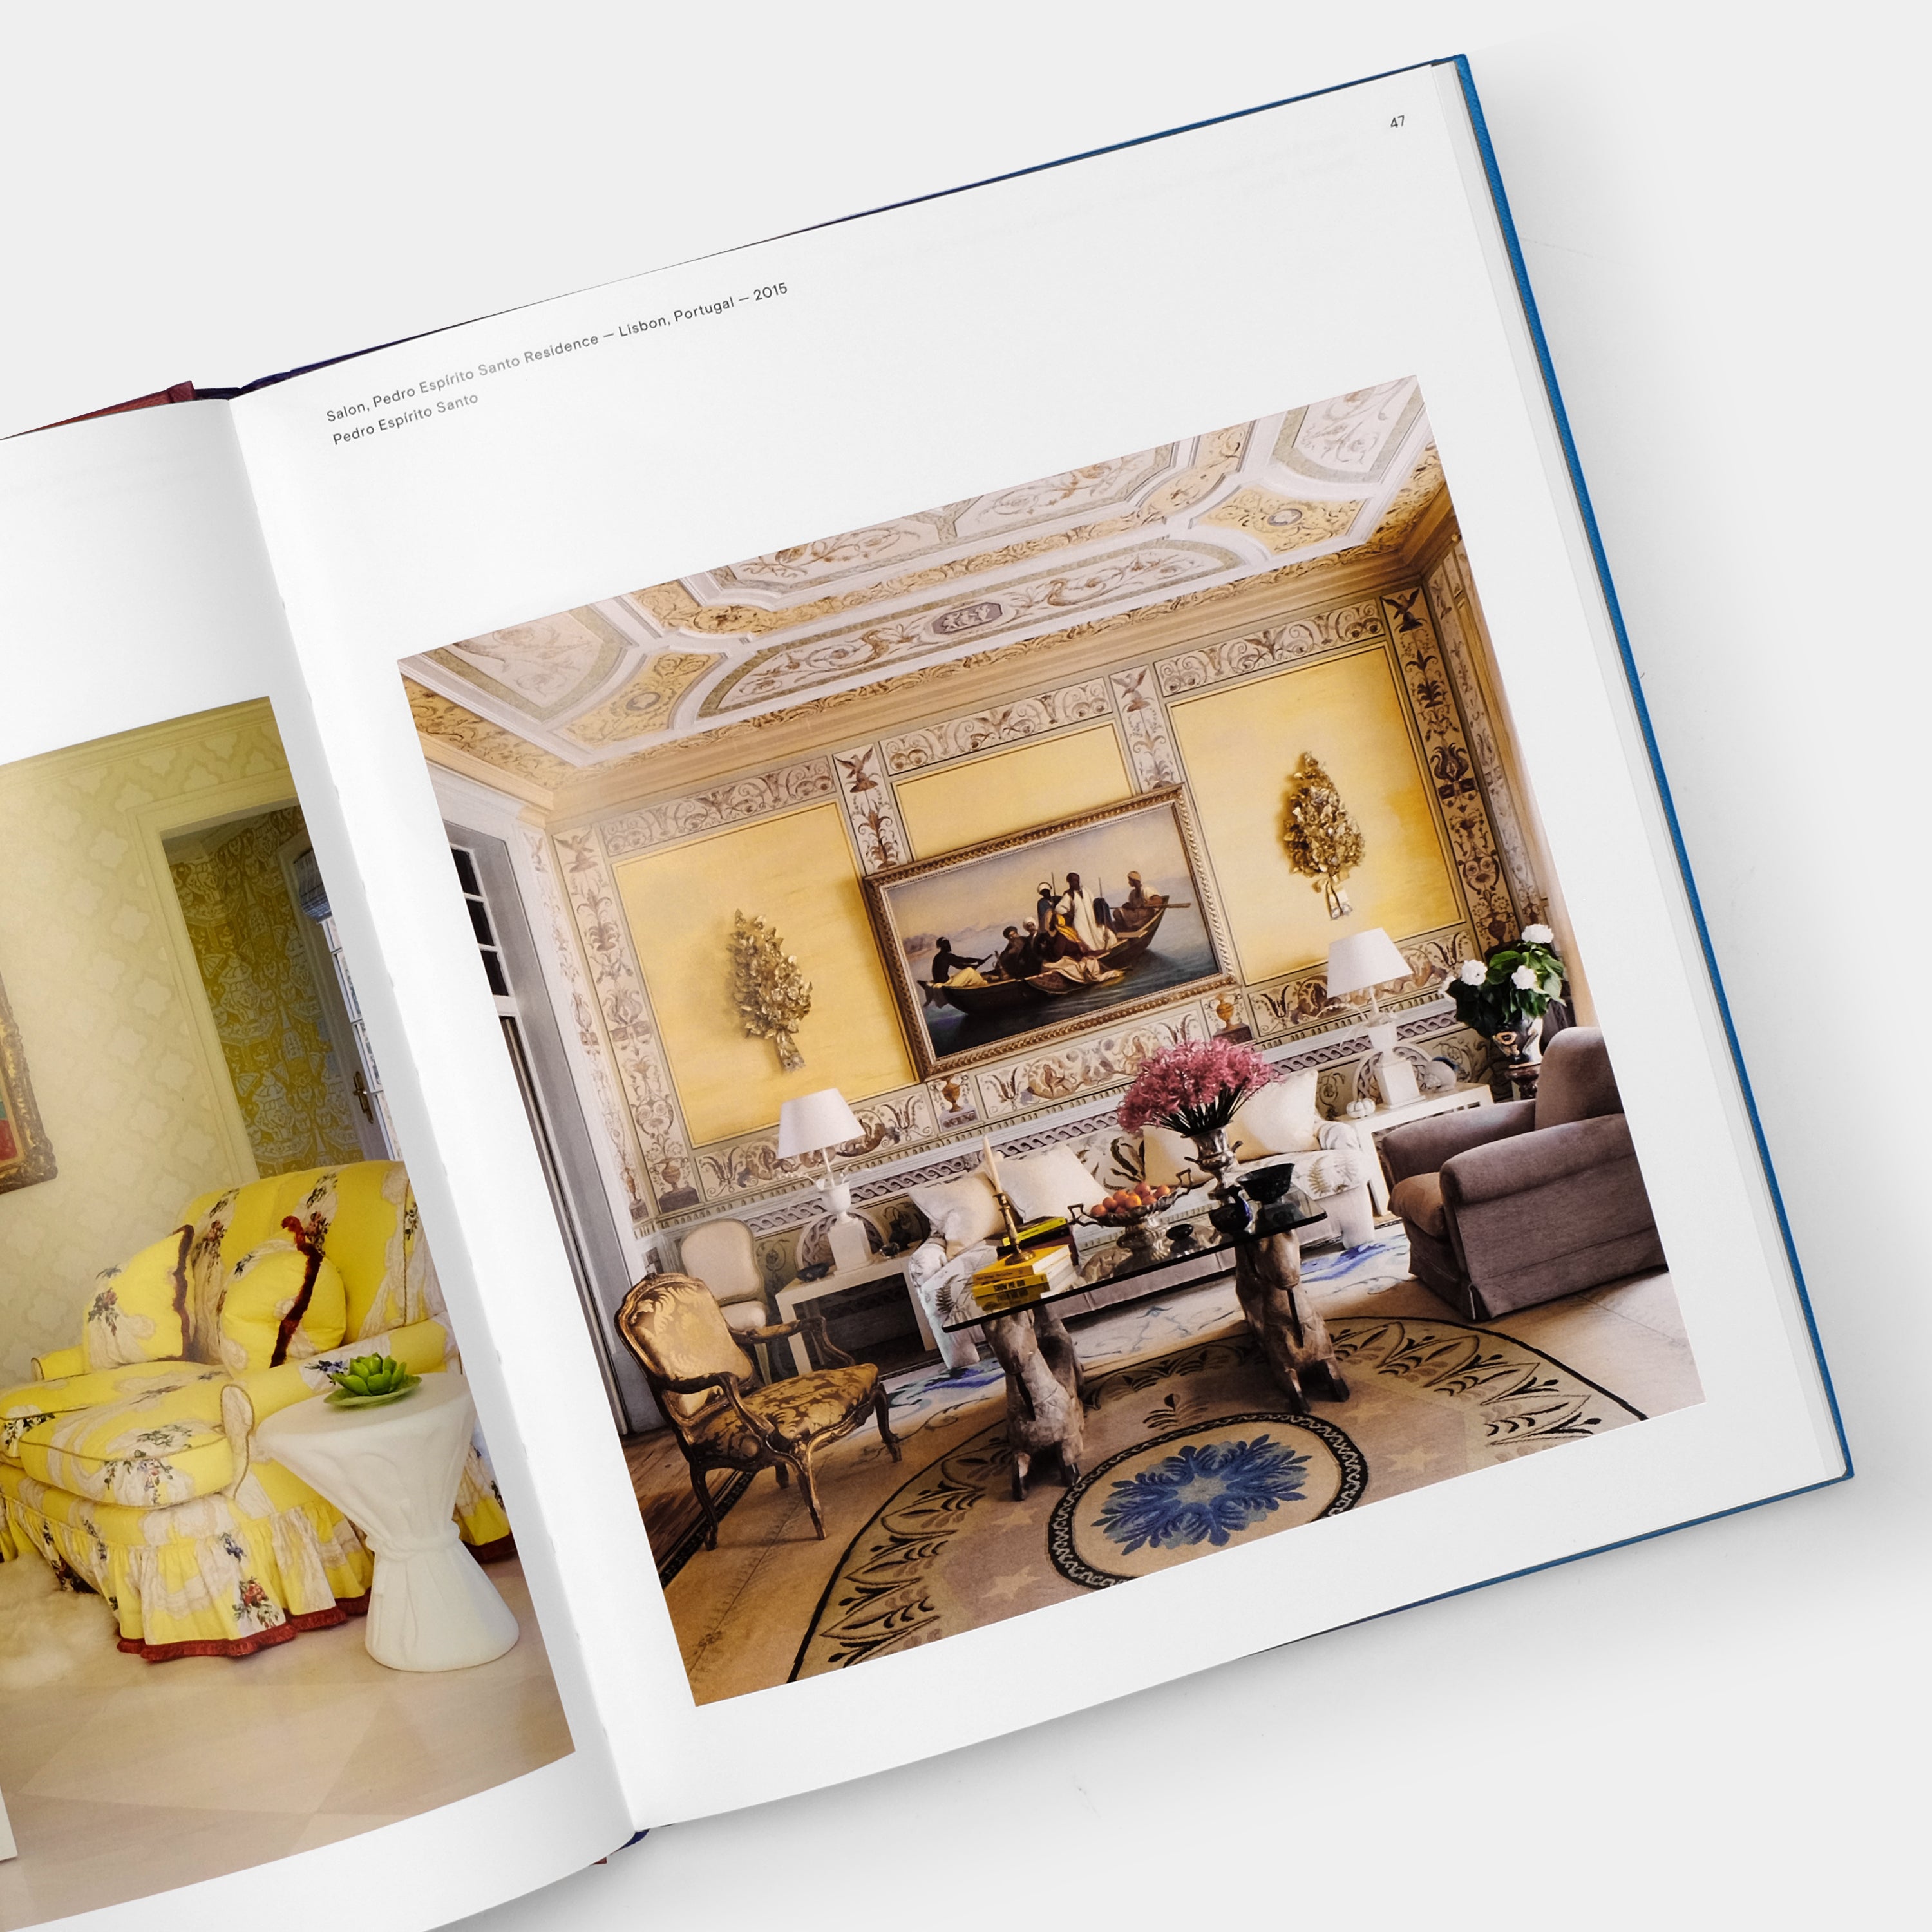 Living in Color: Color in Contemporary Interior Design Phaidon Book